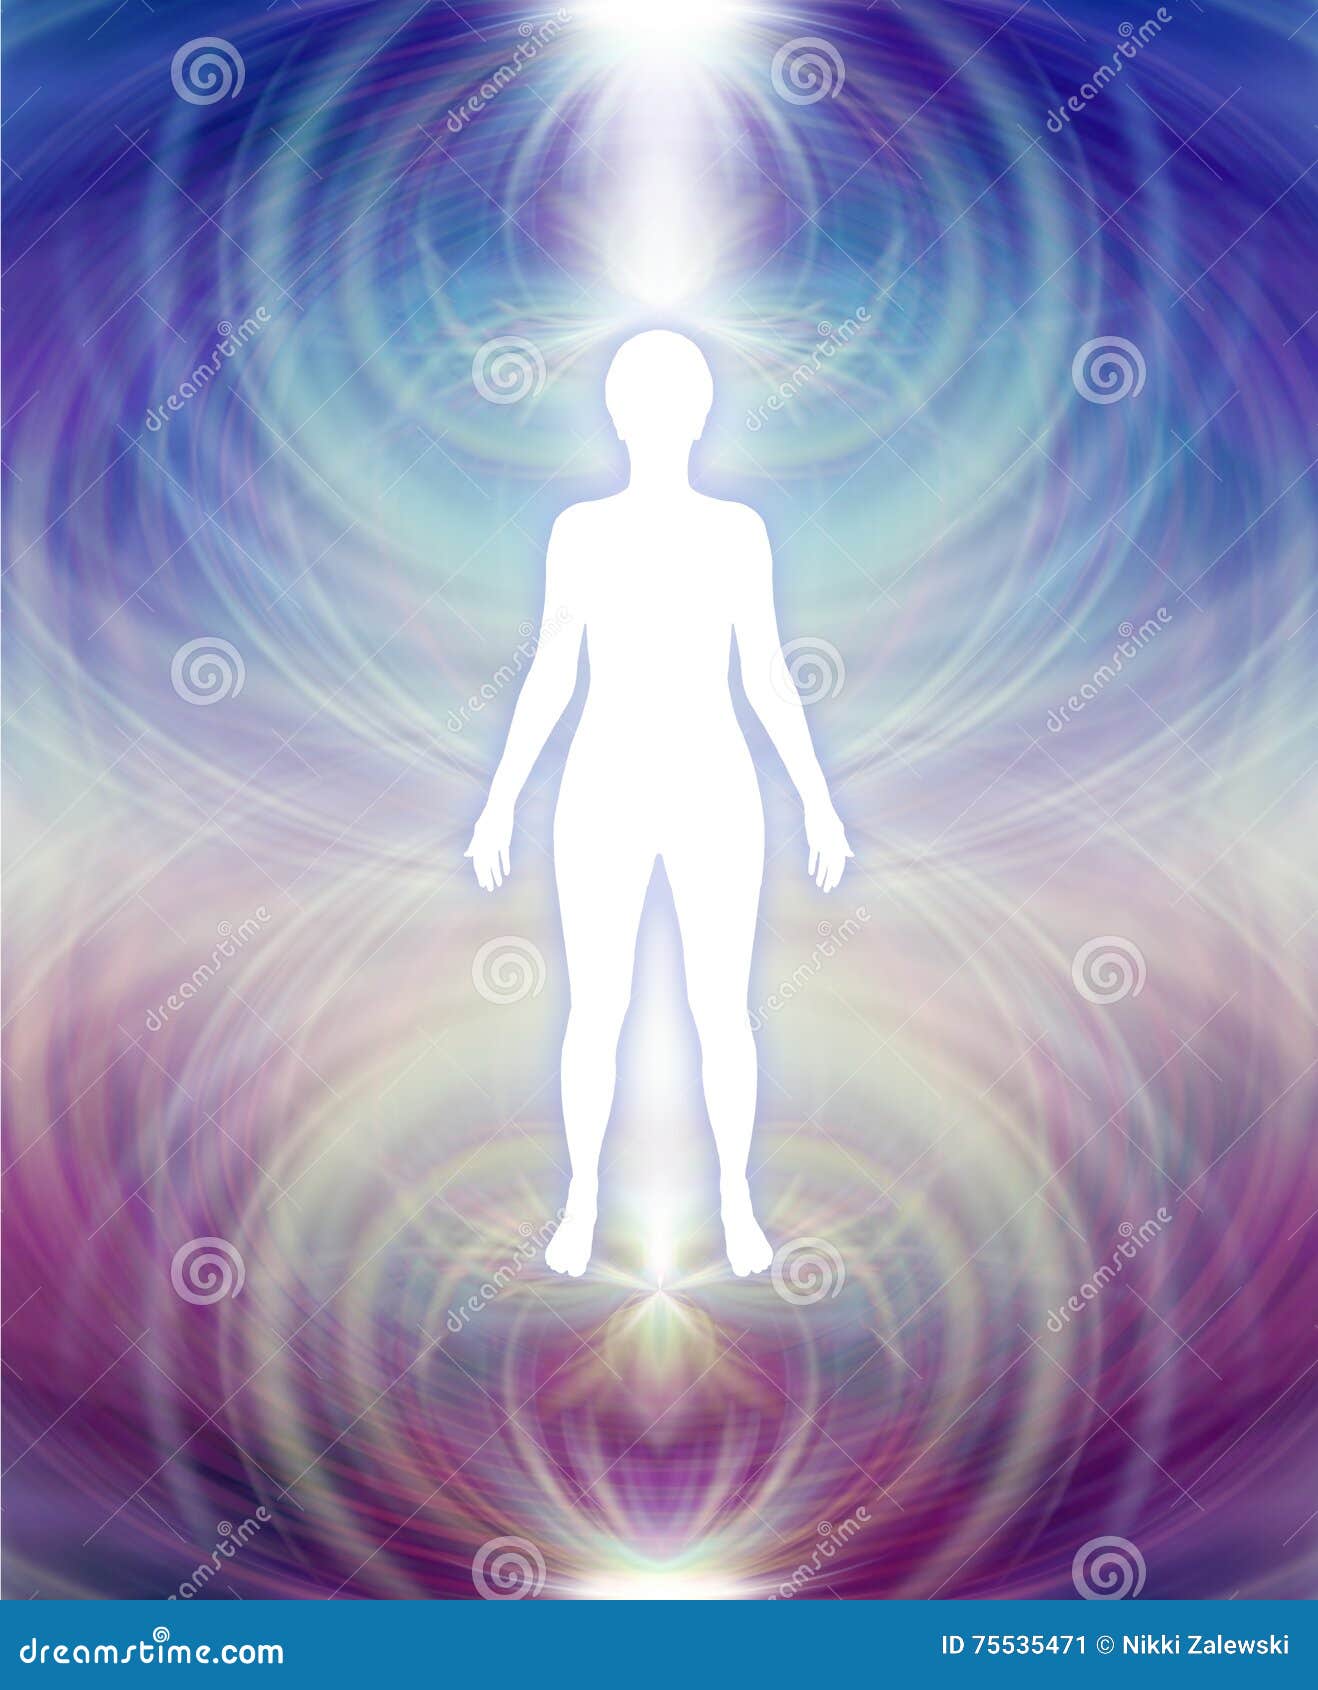 human aura energy field